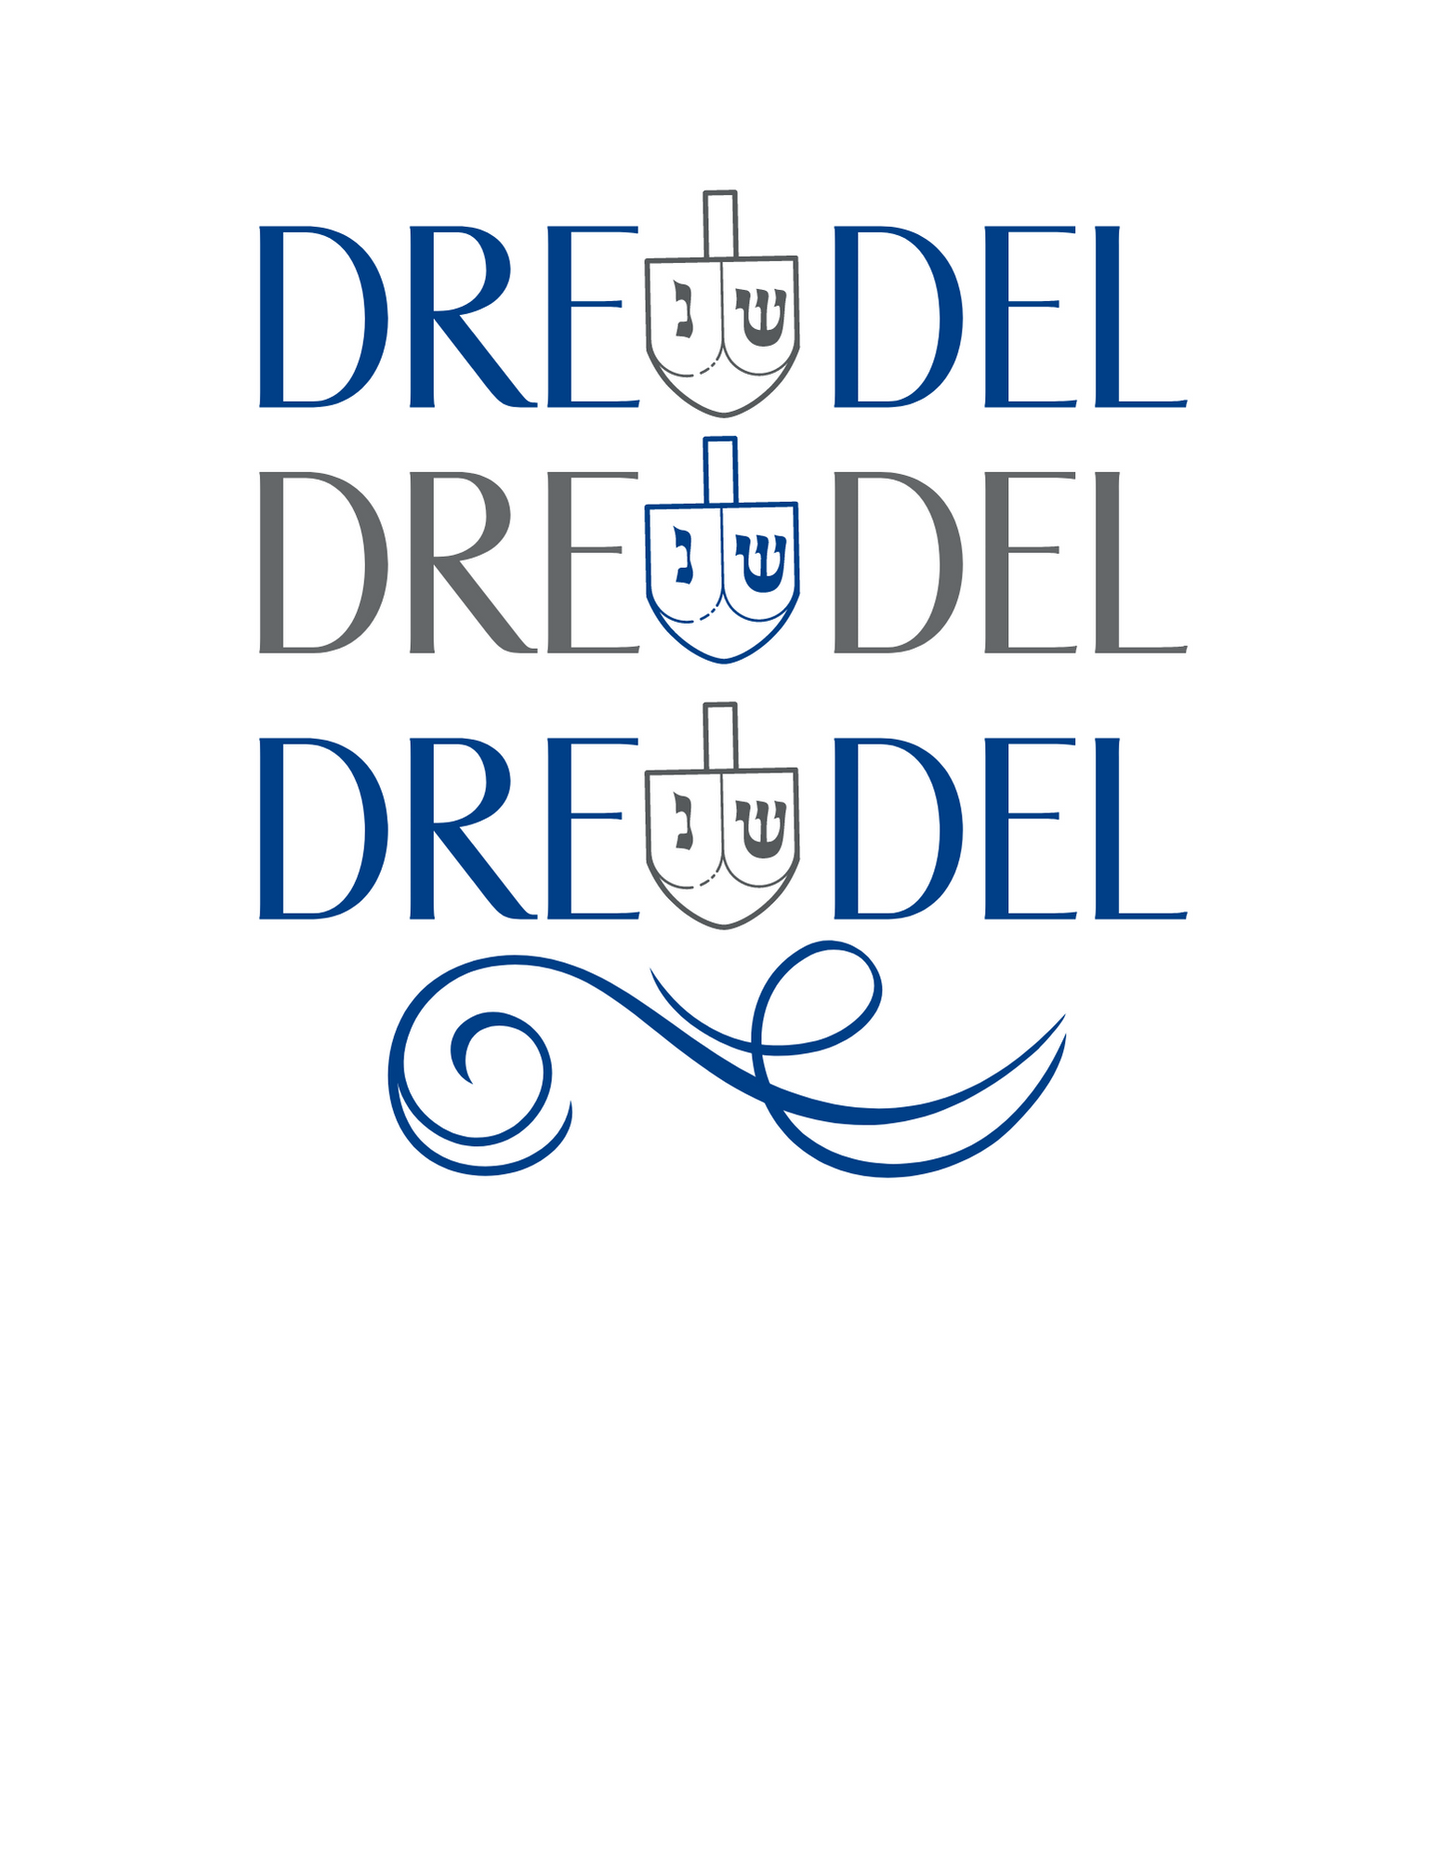 "Dreidel Dreidel Dreidel" Chanukah T-shirt